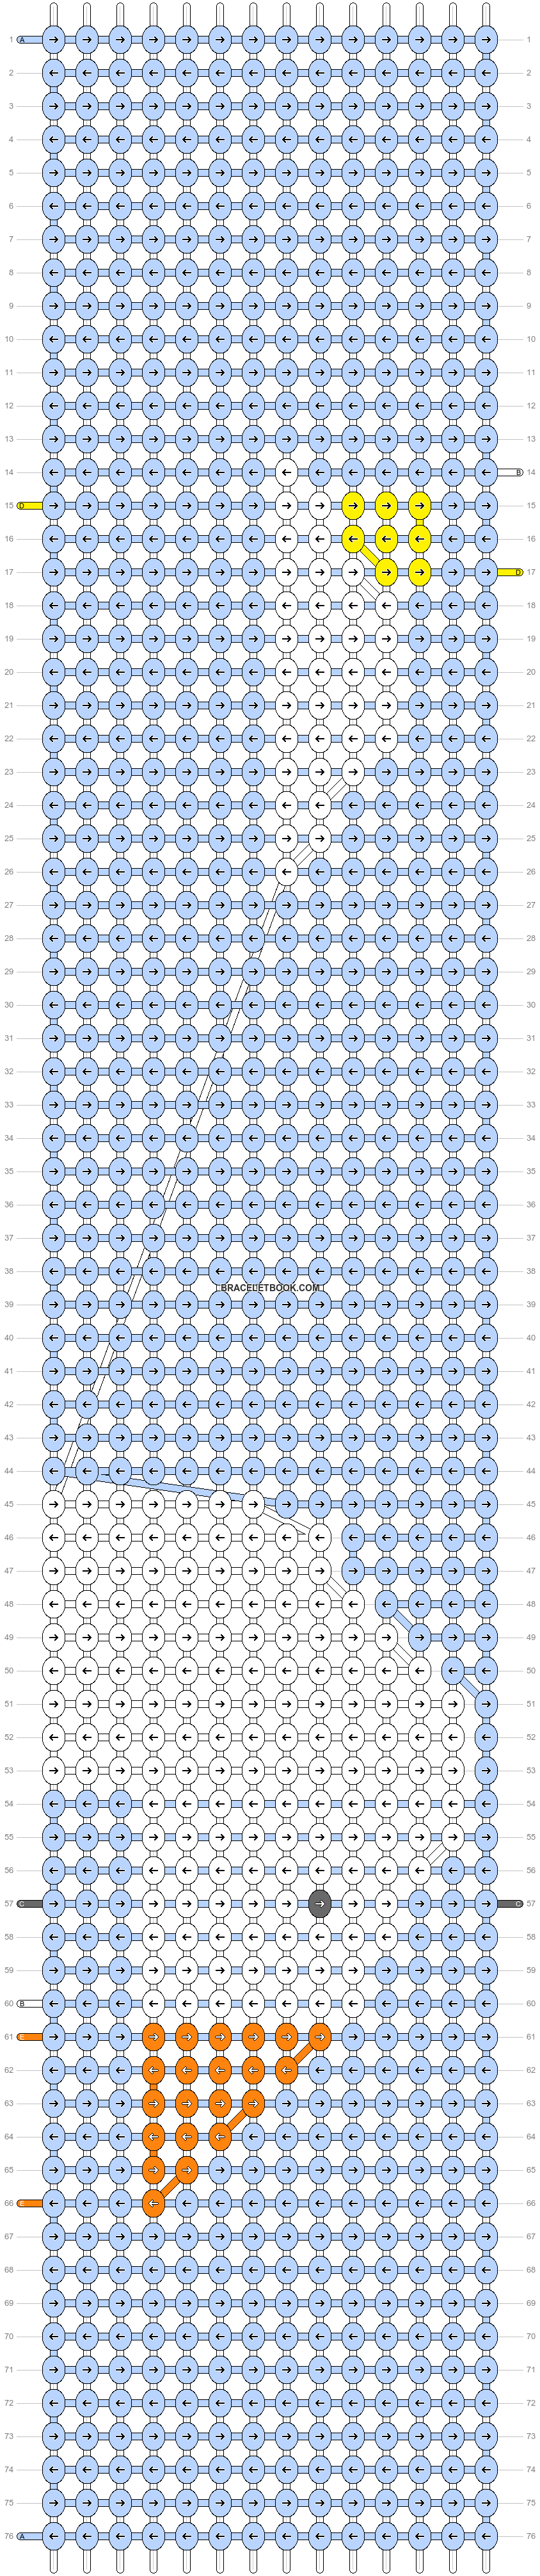 Alpha pattern #43102 pattern